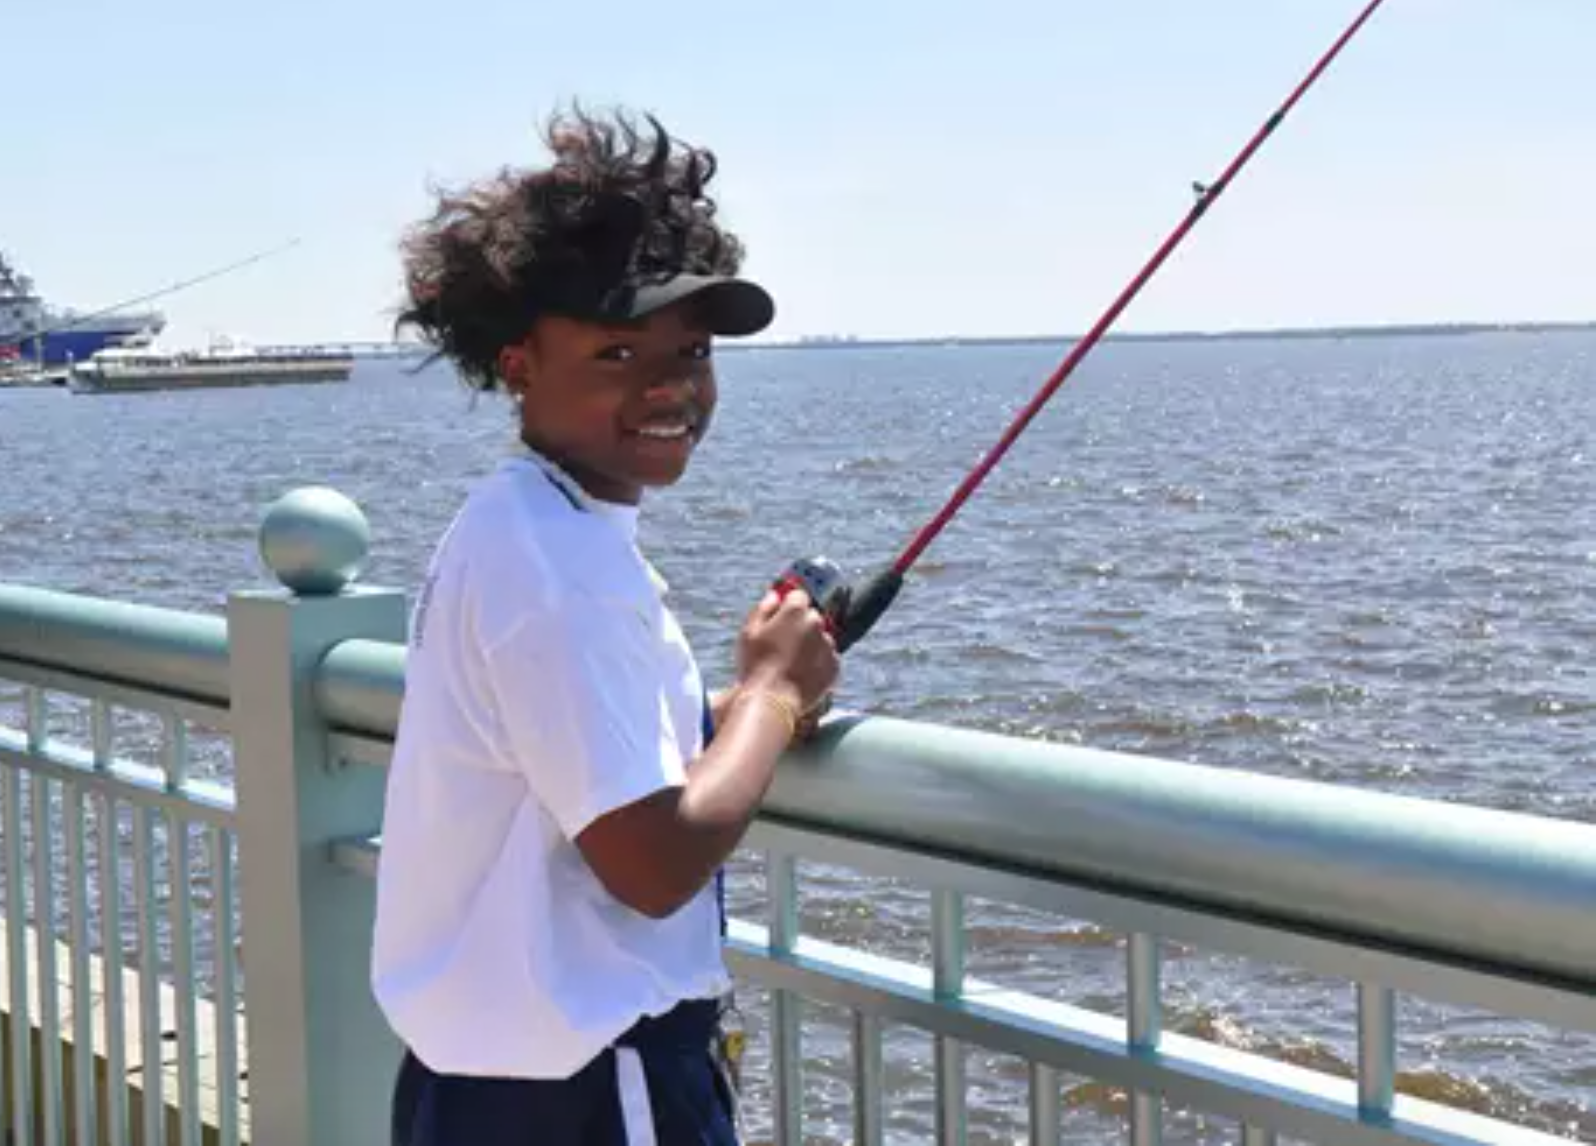 https://myfamilytravels.com/content/uploads/2021/04/florida-kfc-girl-fishing-rod-pier.png